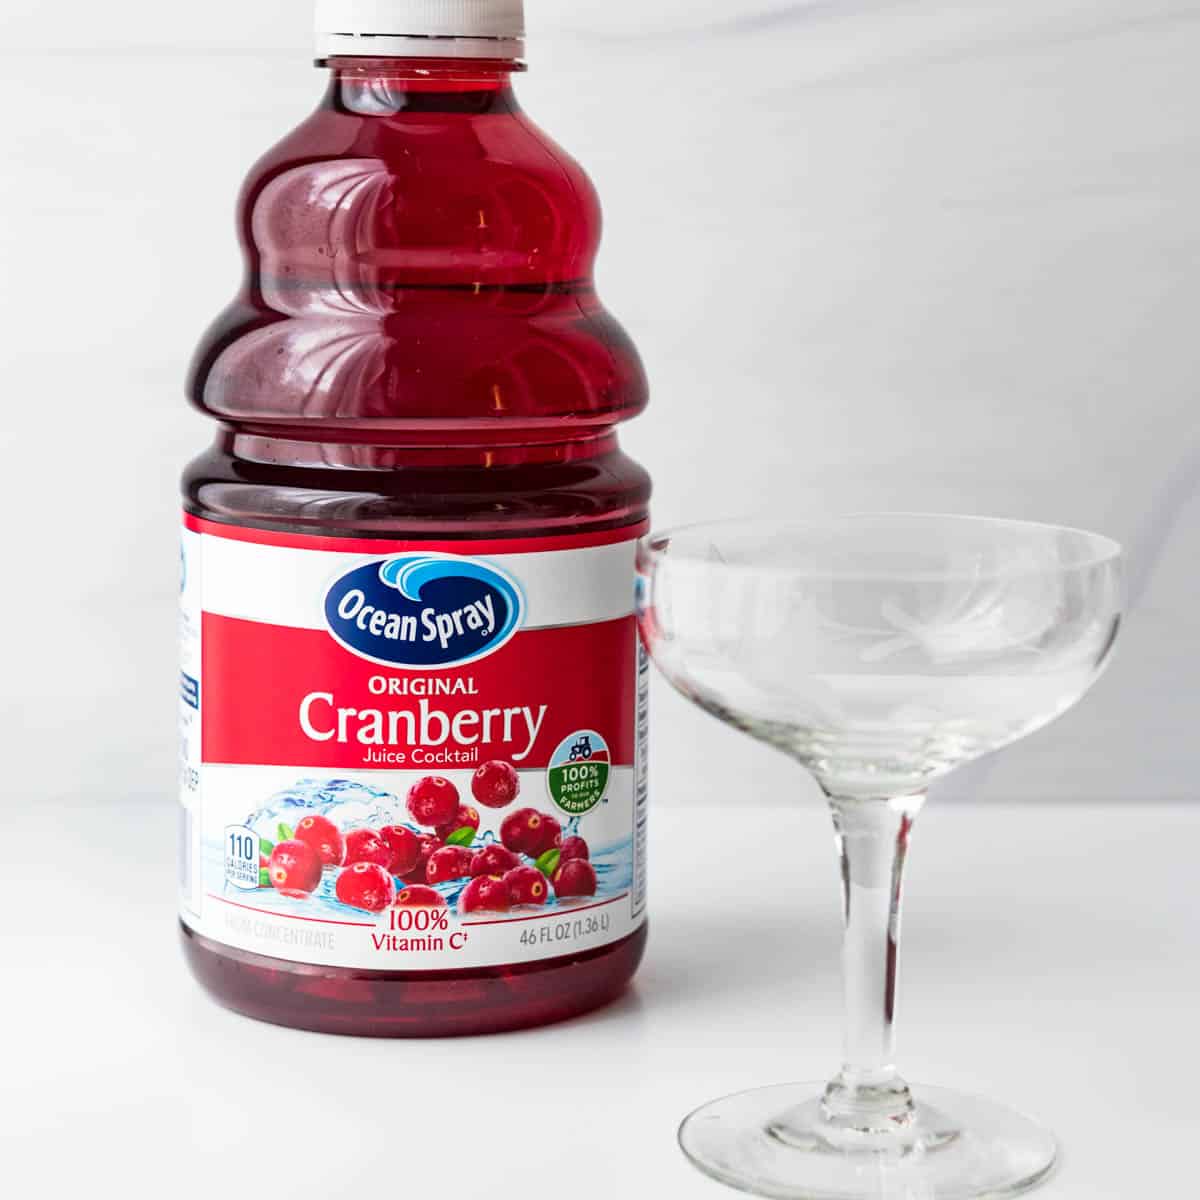 Ocean spray cranberry juice.